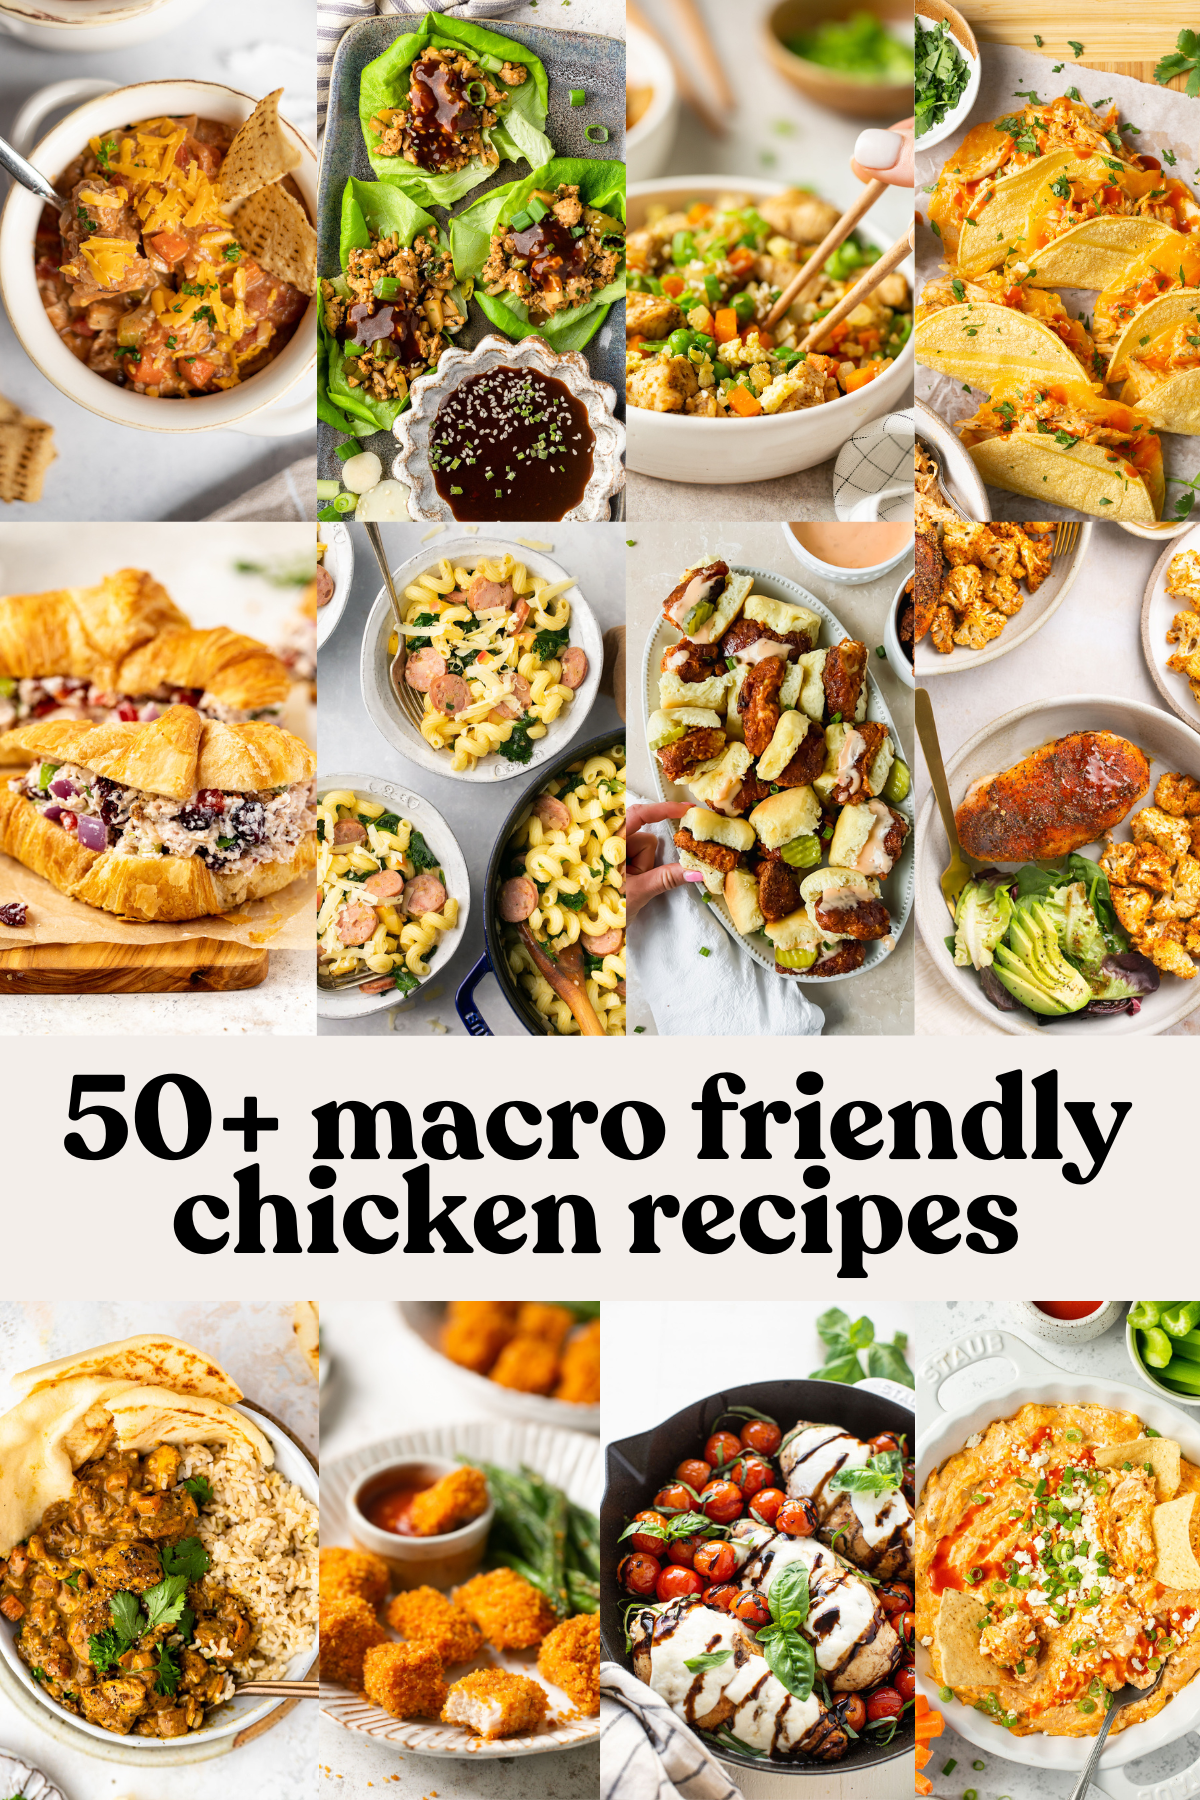 https://laurenfitfoodie.com/wp-content/uploads/2023/01/50-macro-friendly-chicken-recipes-1.png